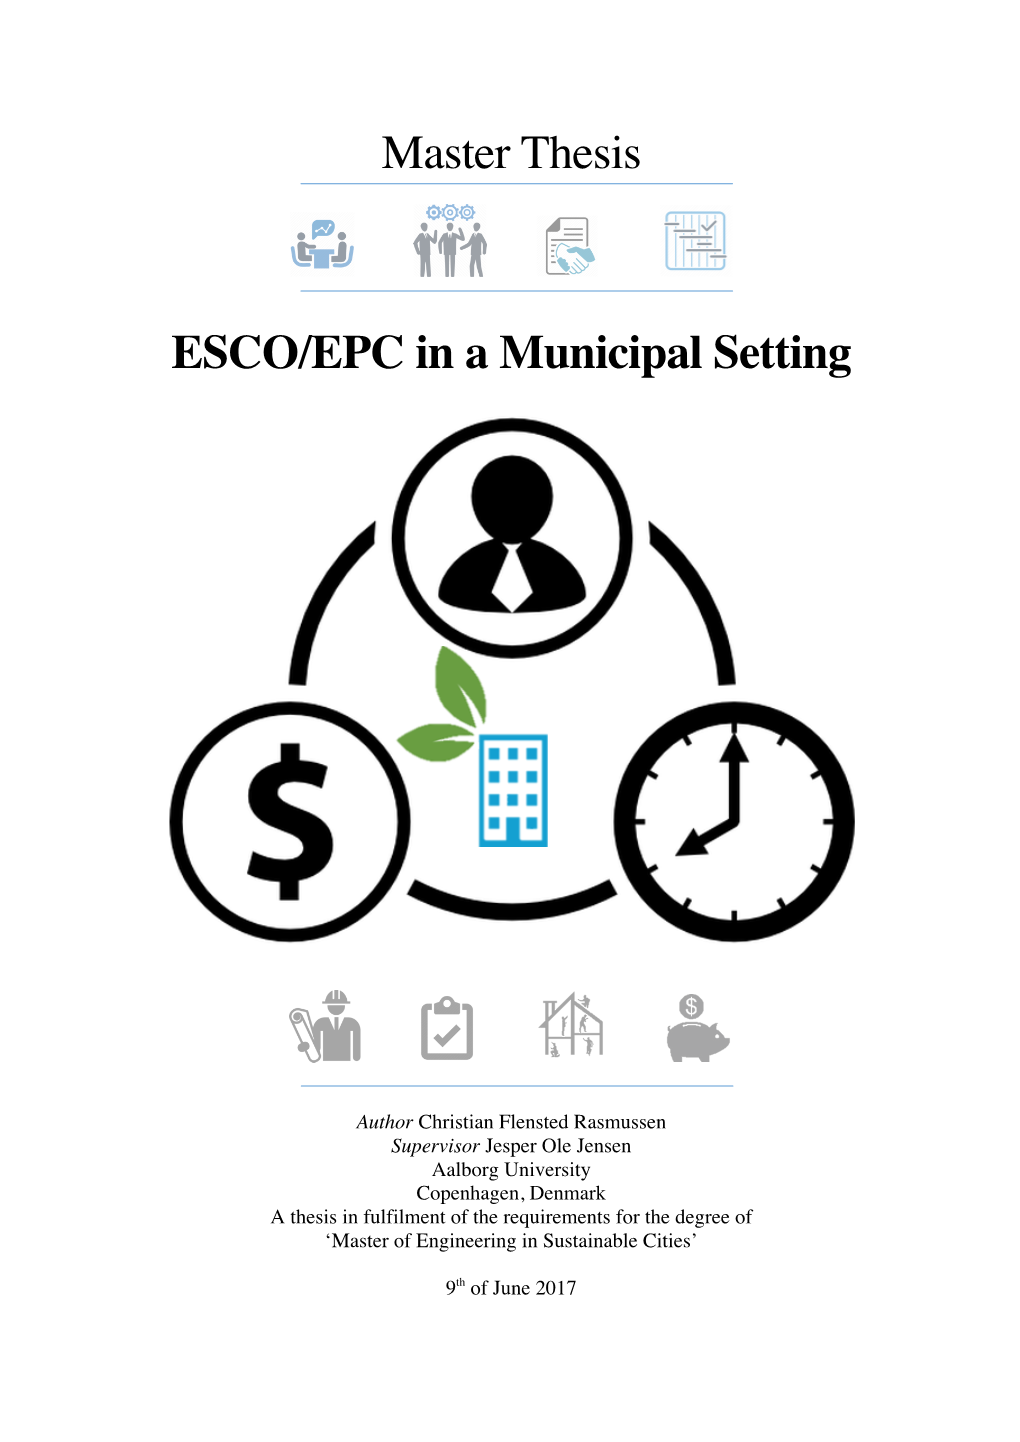 Master Thesis ESCO/EPC in a Municipal Setting